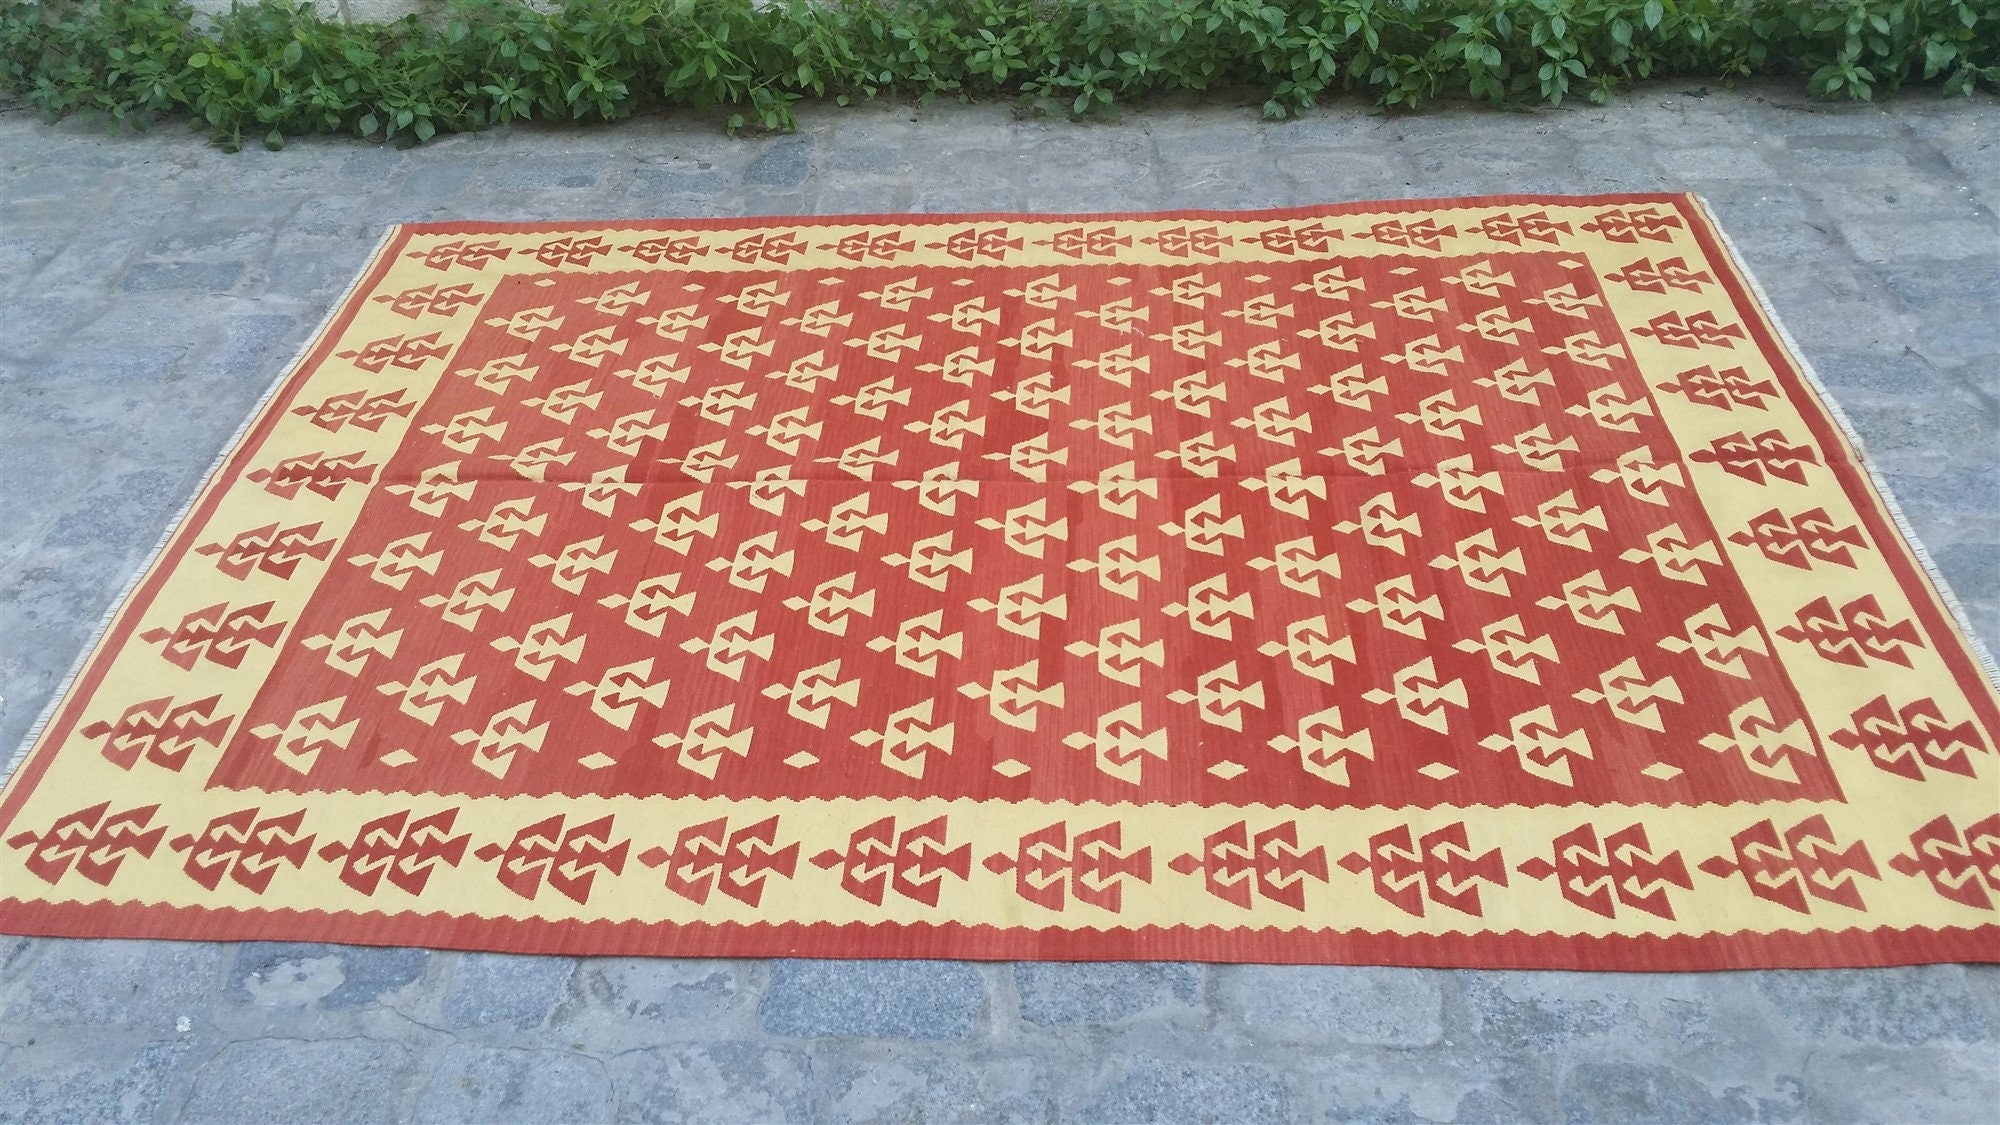 Konya Turkish Kilim Rug, 6 x 5 ft Tan Rust Beige Handmade Organic Wool Vintage Rug, Boho Rustic Anatolian Moroccan Carpet Persian Area Rug